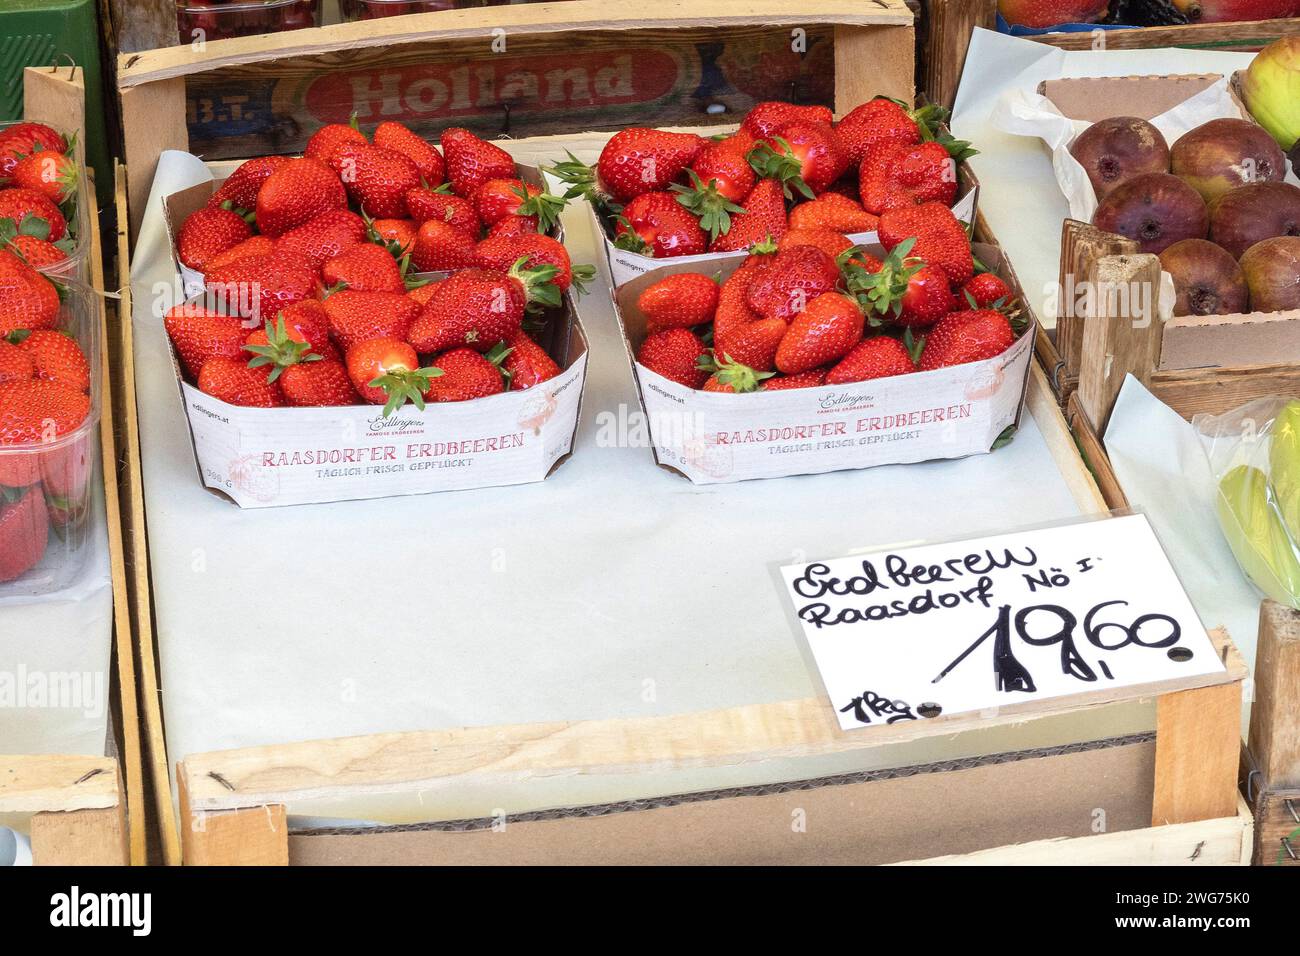 Strawberries From Raasdorf In NÖ Am Wiener Naschmarkt, Austria Stock Photo